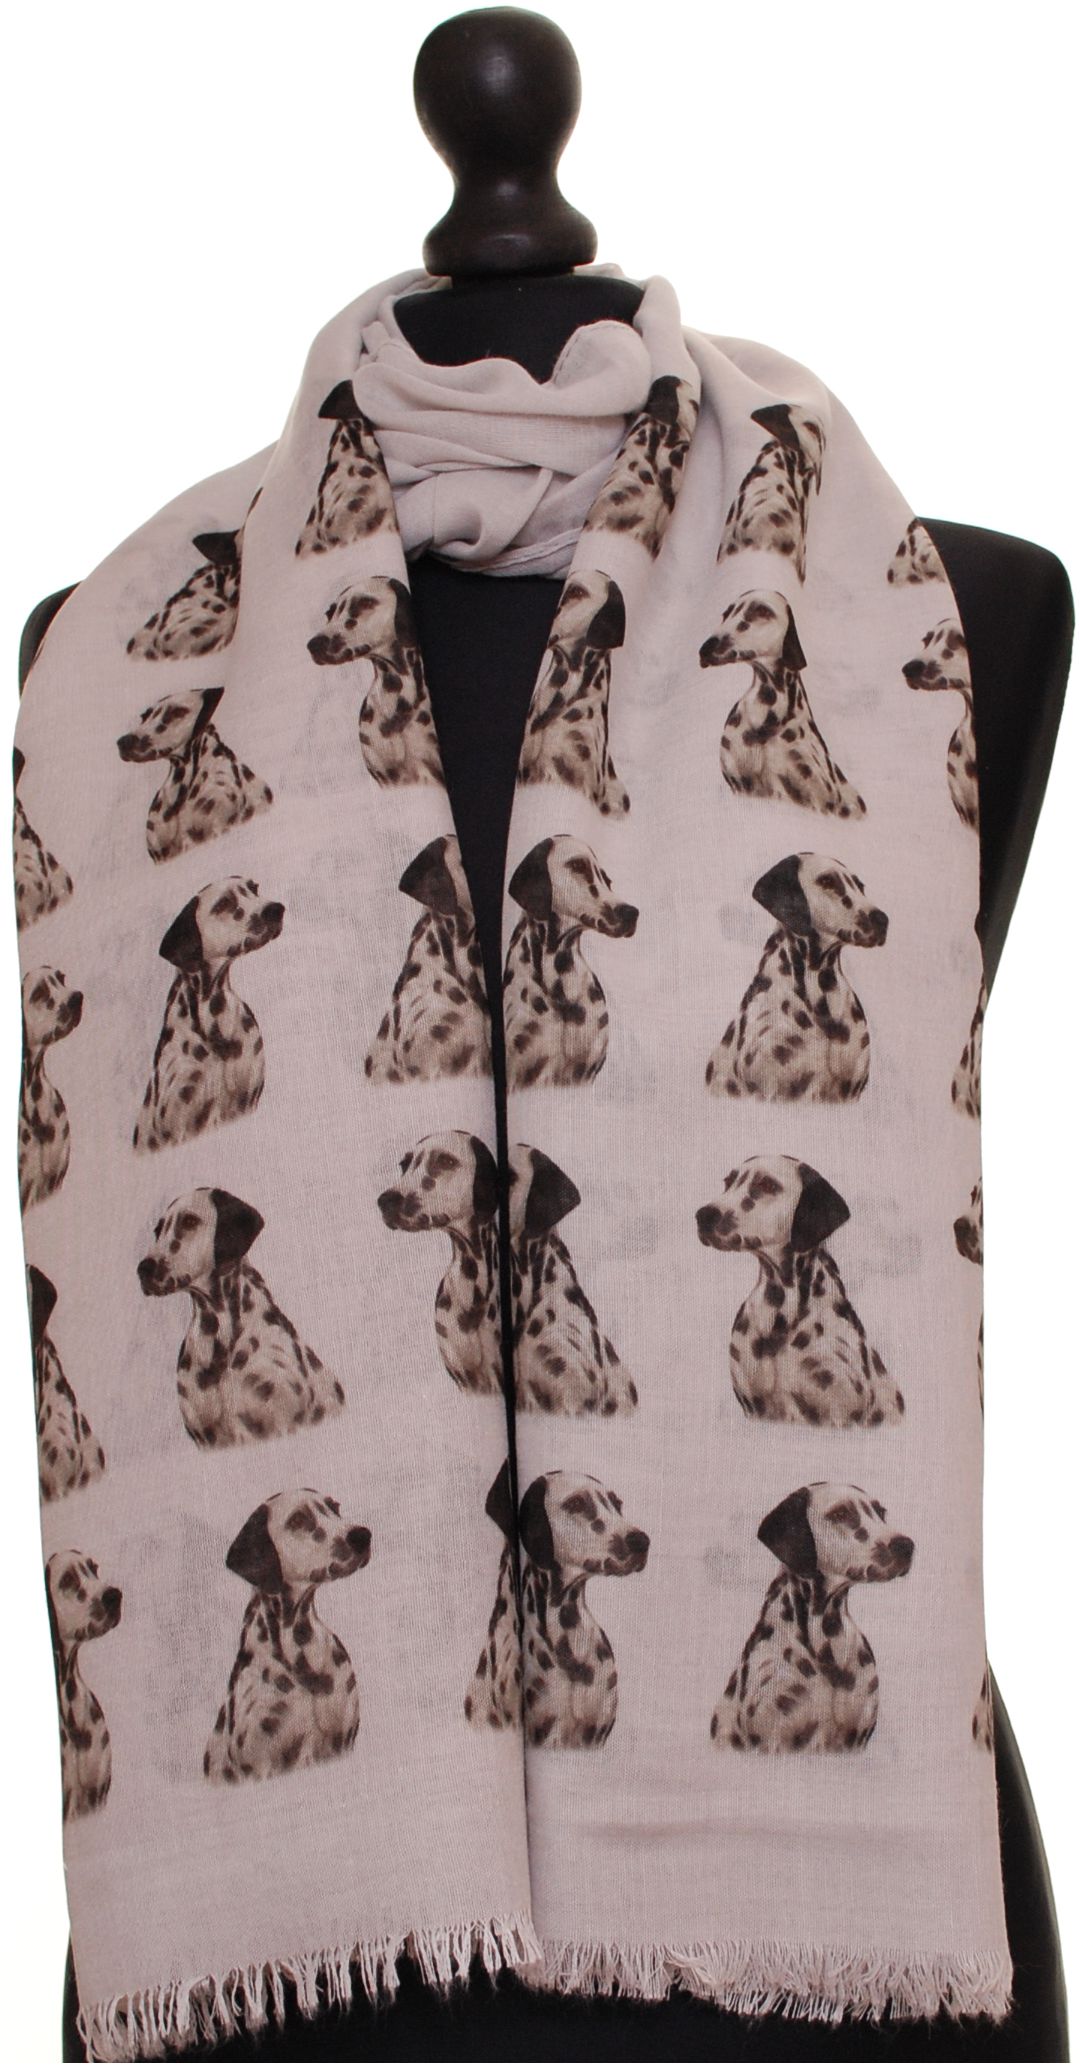 Dalmatian hand printed ladies fashion scarf